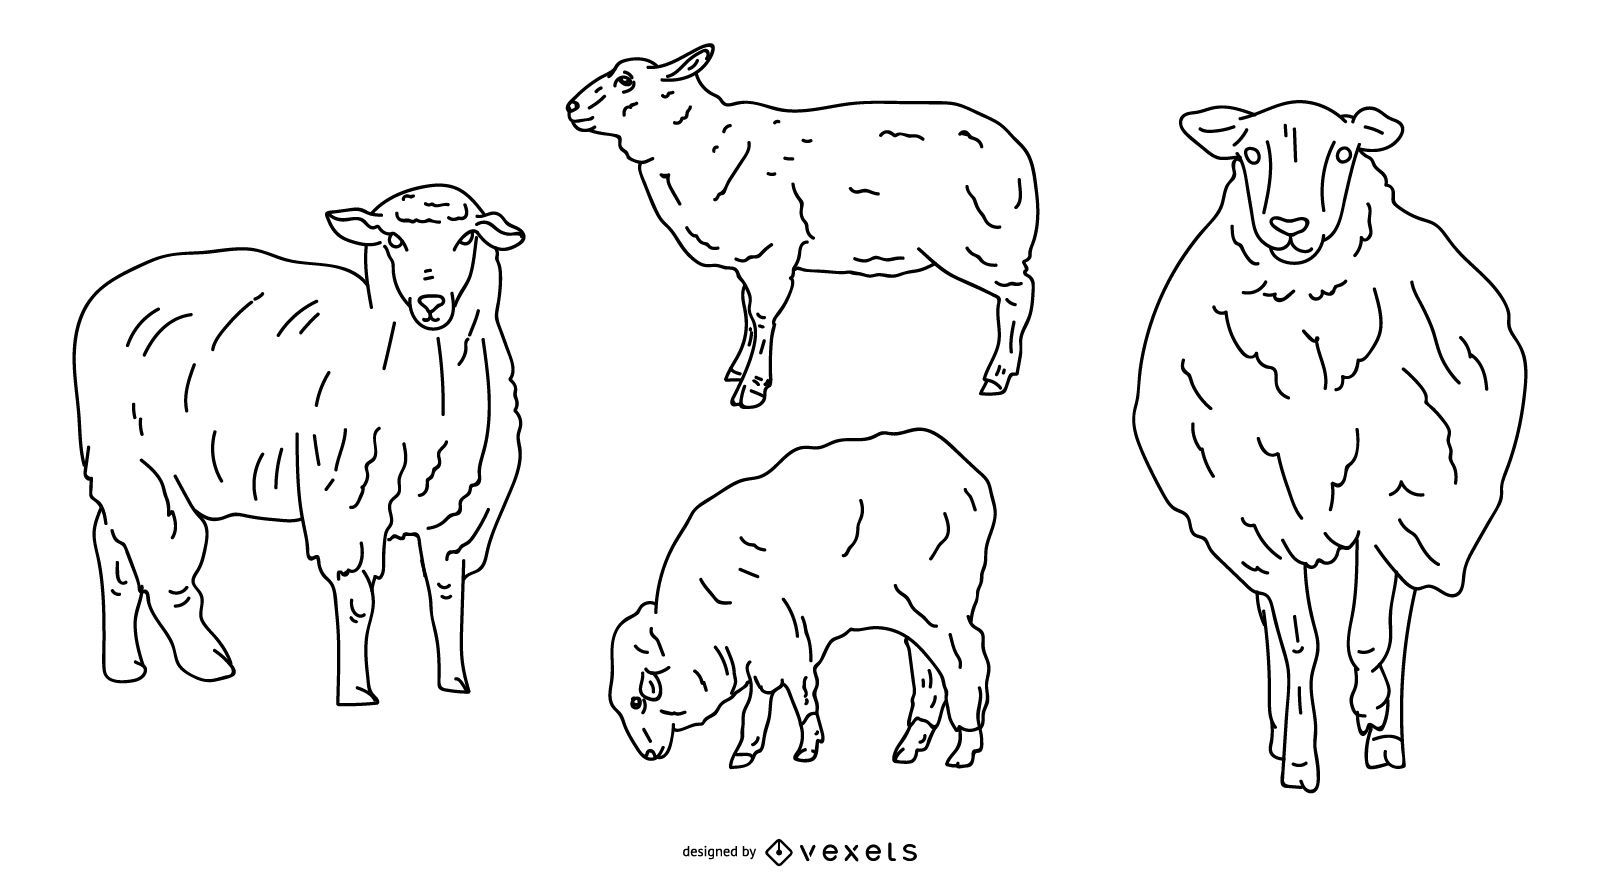 Diseño vectorial de trazo de oveja